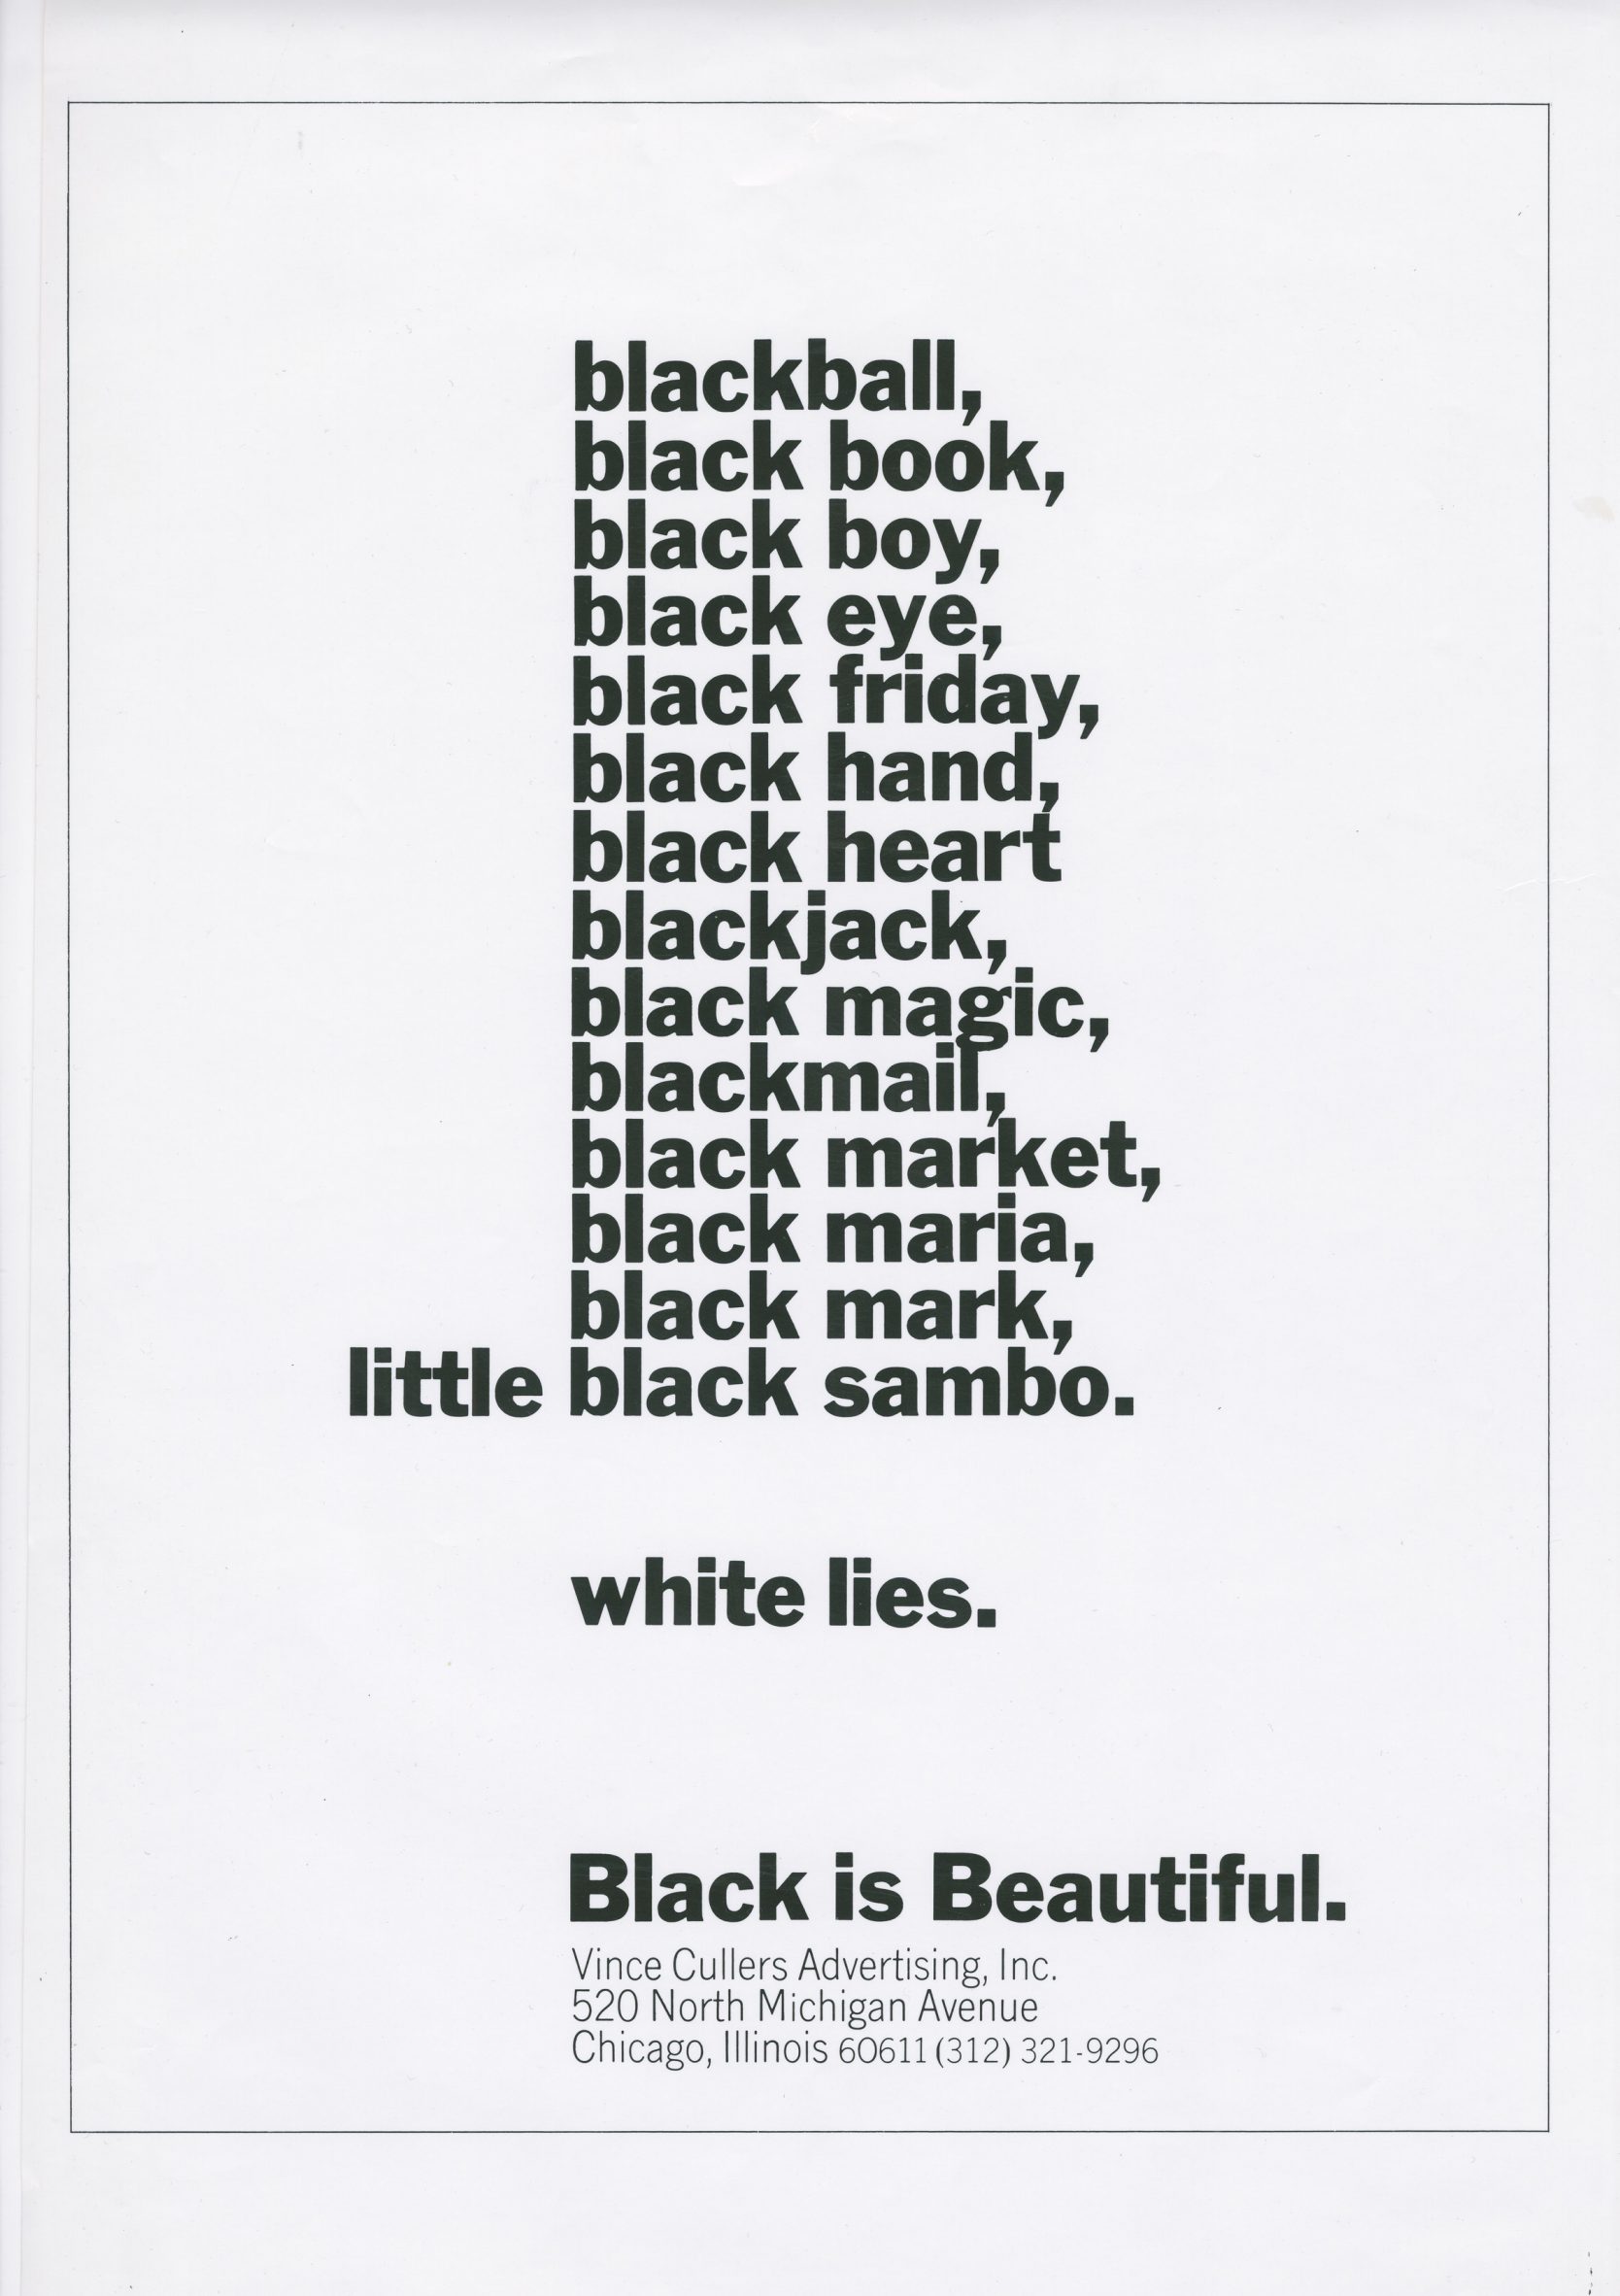 Emmett McBain's Black is Beautiful advert